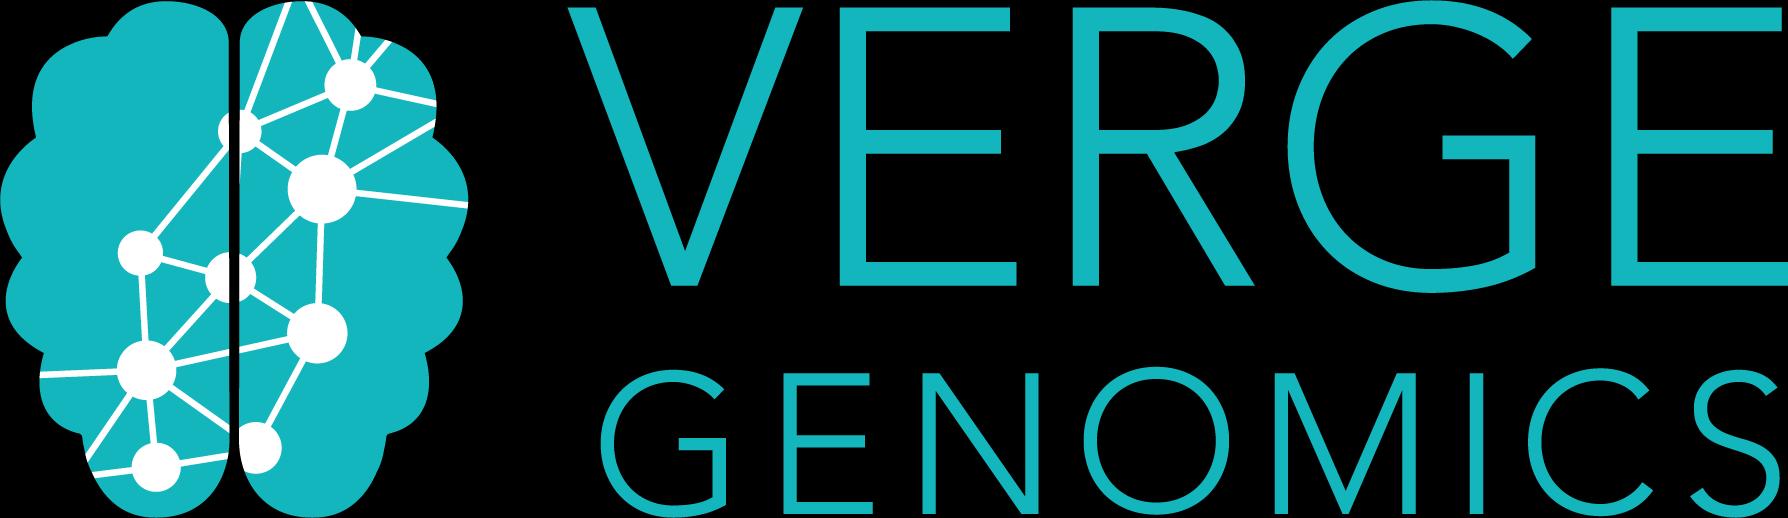 Verge Genomics_logo